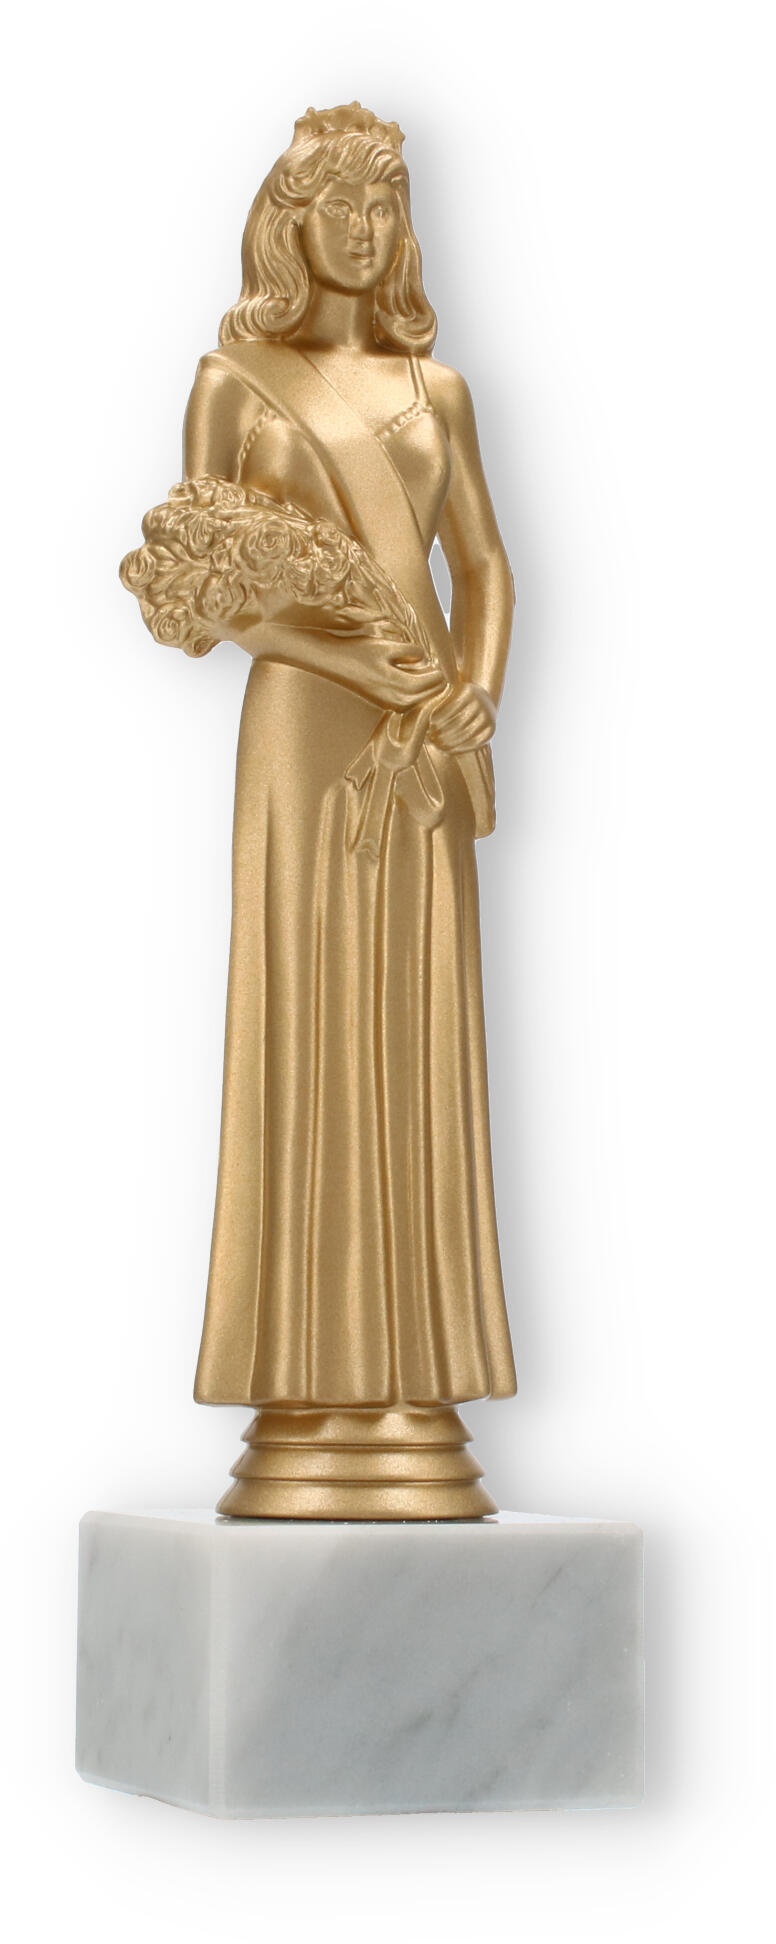 Pokal Kunststofffigur Schönheitskönigin goldmetallic auf weißem Marmorsockel 24,7cm